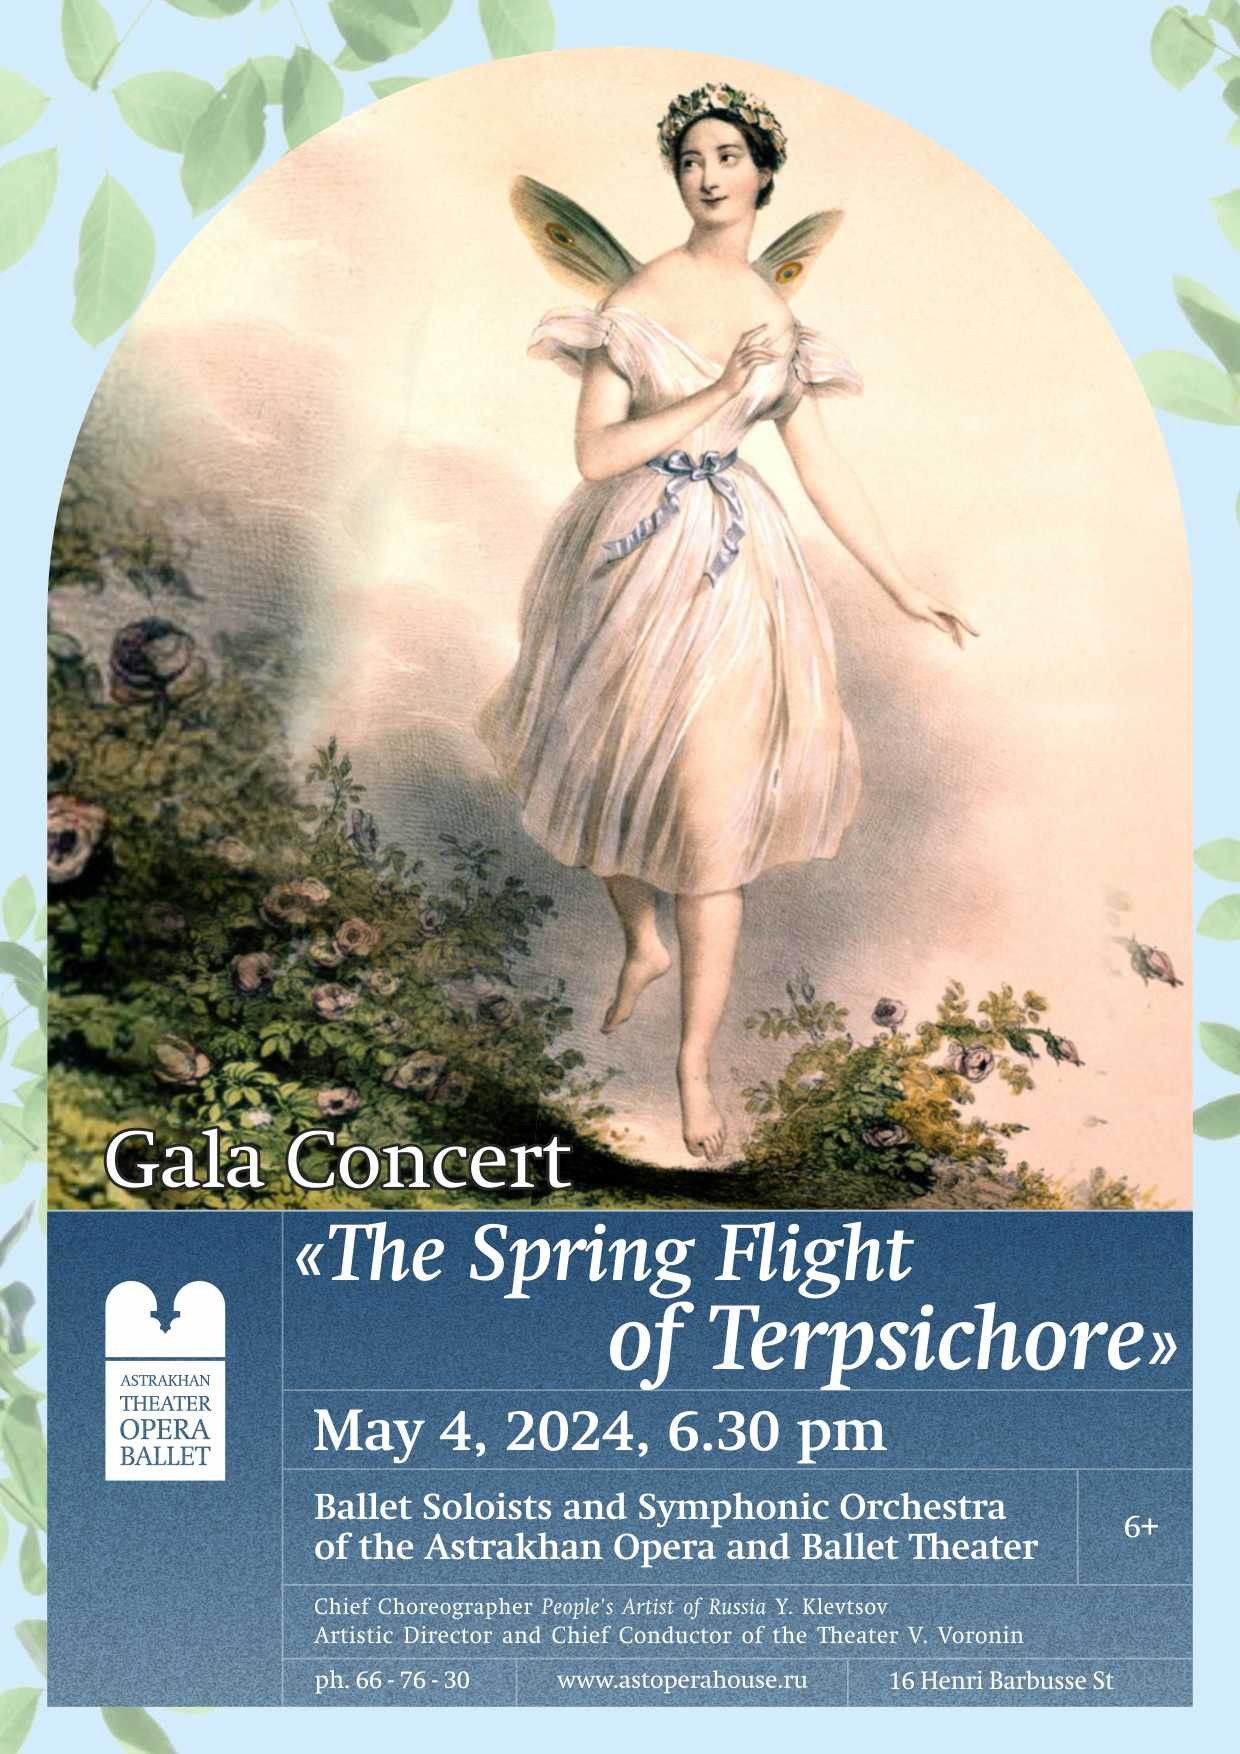 Ballet Gala Concert “The Spring Flight of Terpsichore”